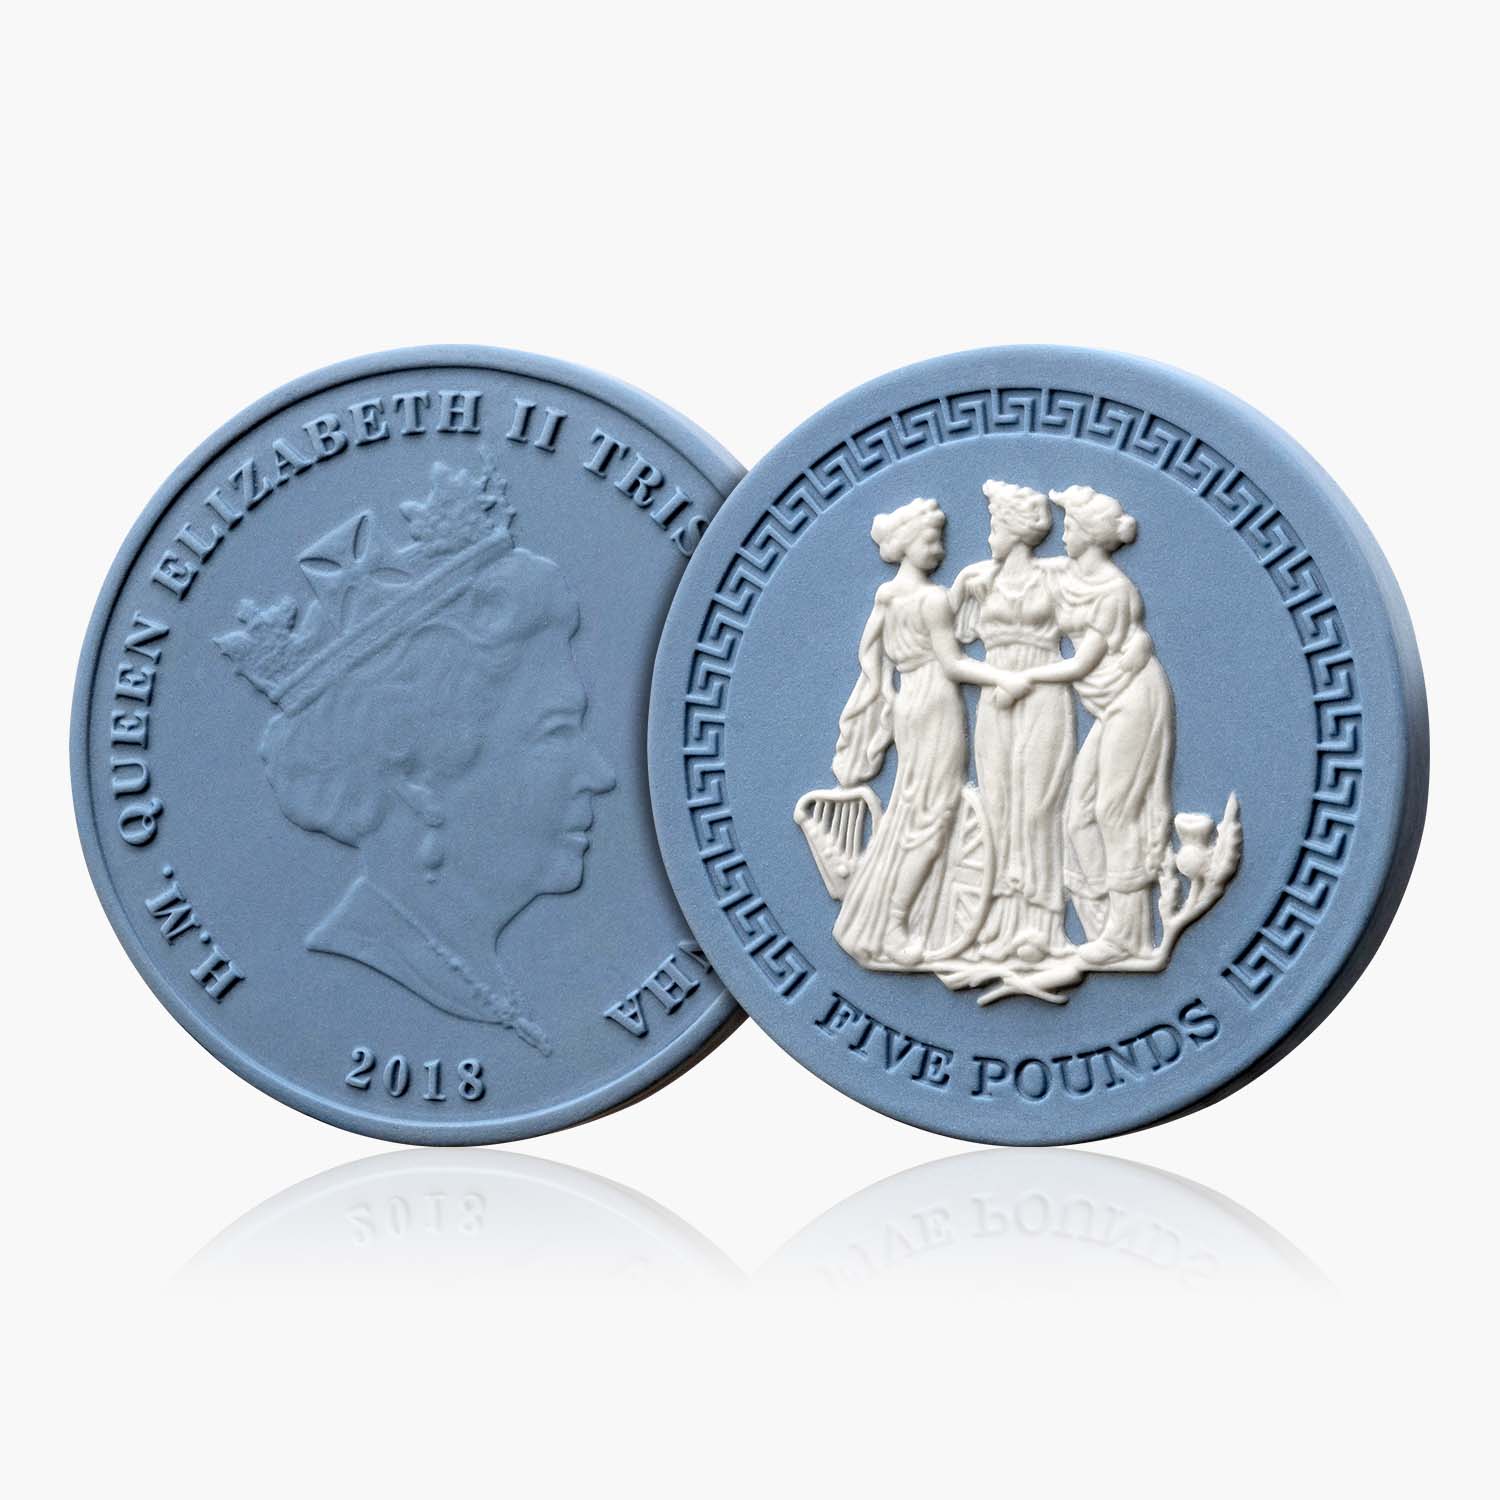 Les Trois Grâces Wedgwood Jasperware Coin